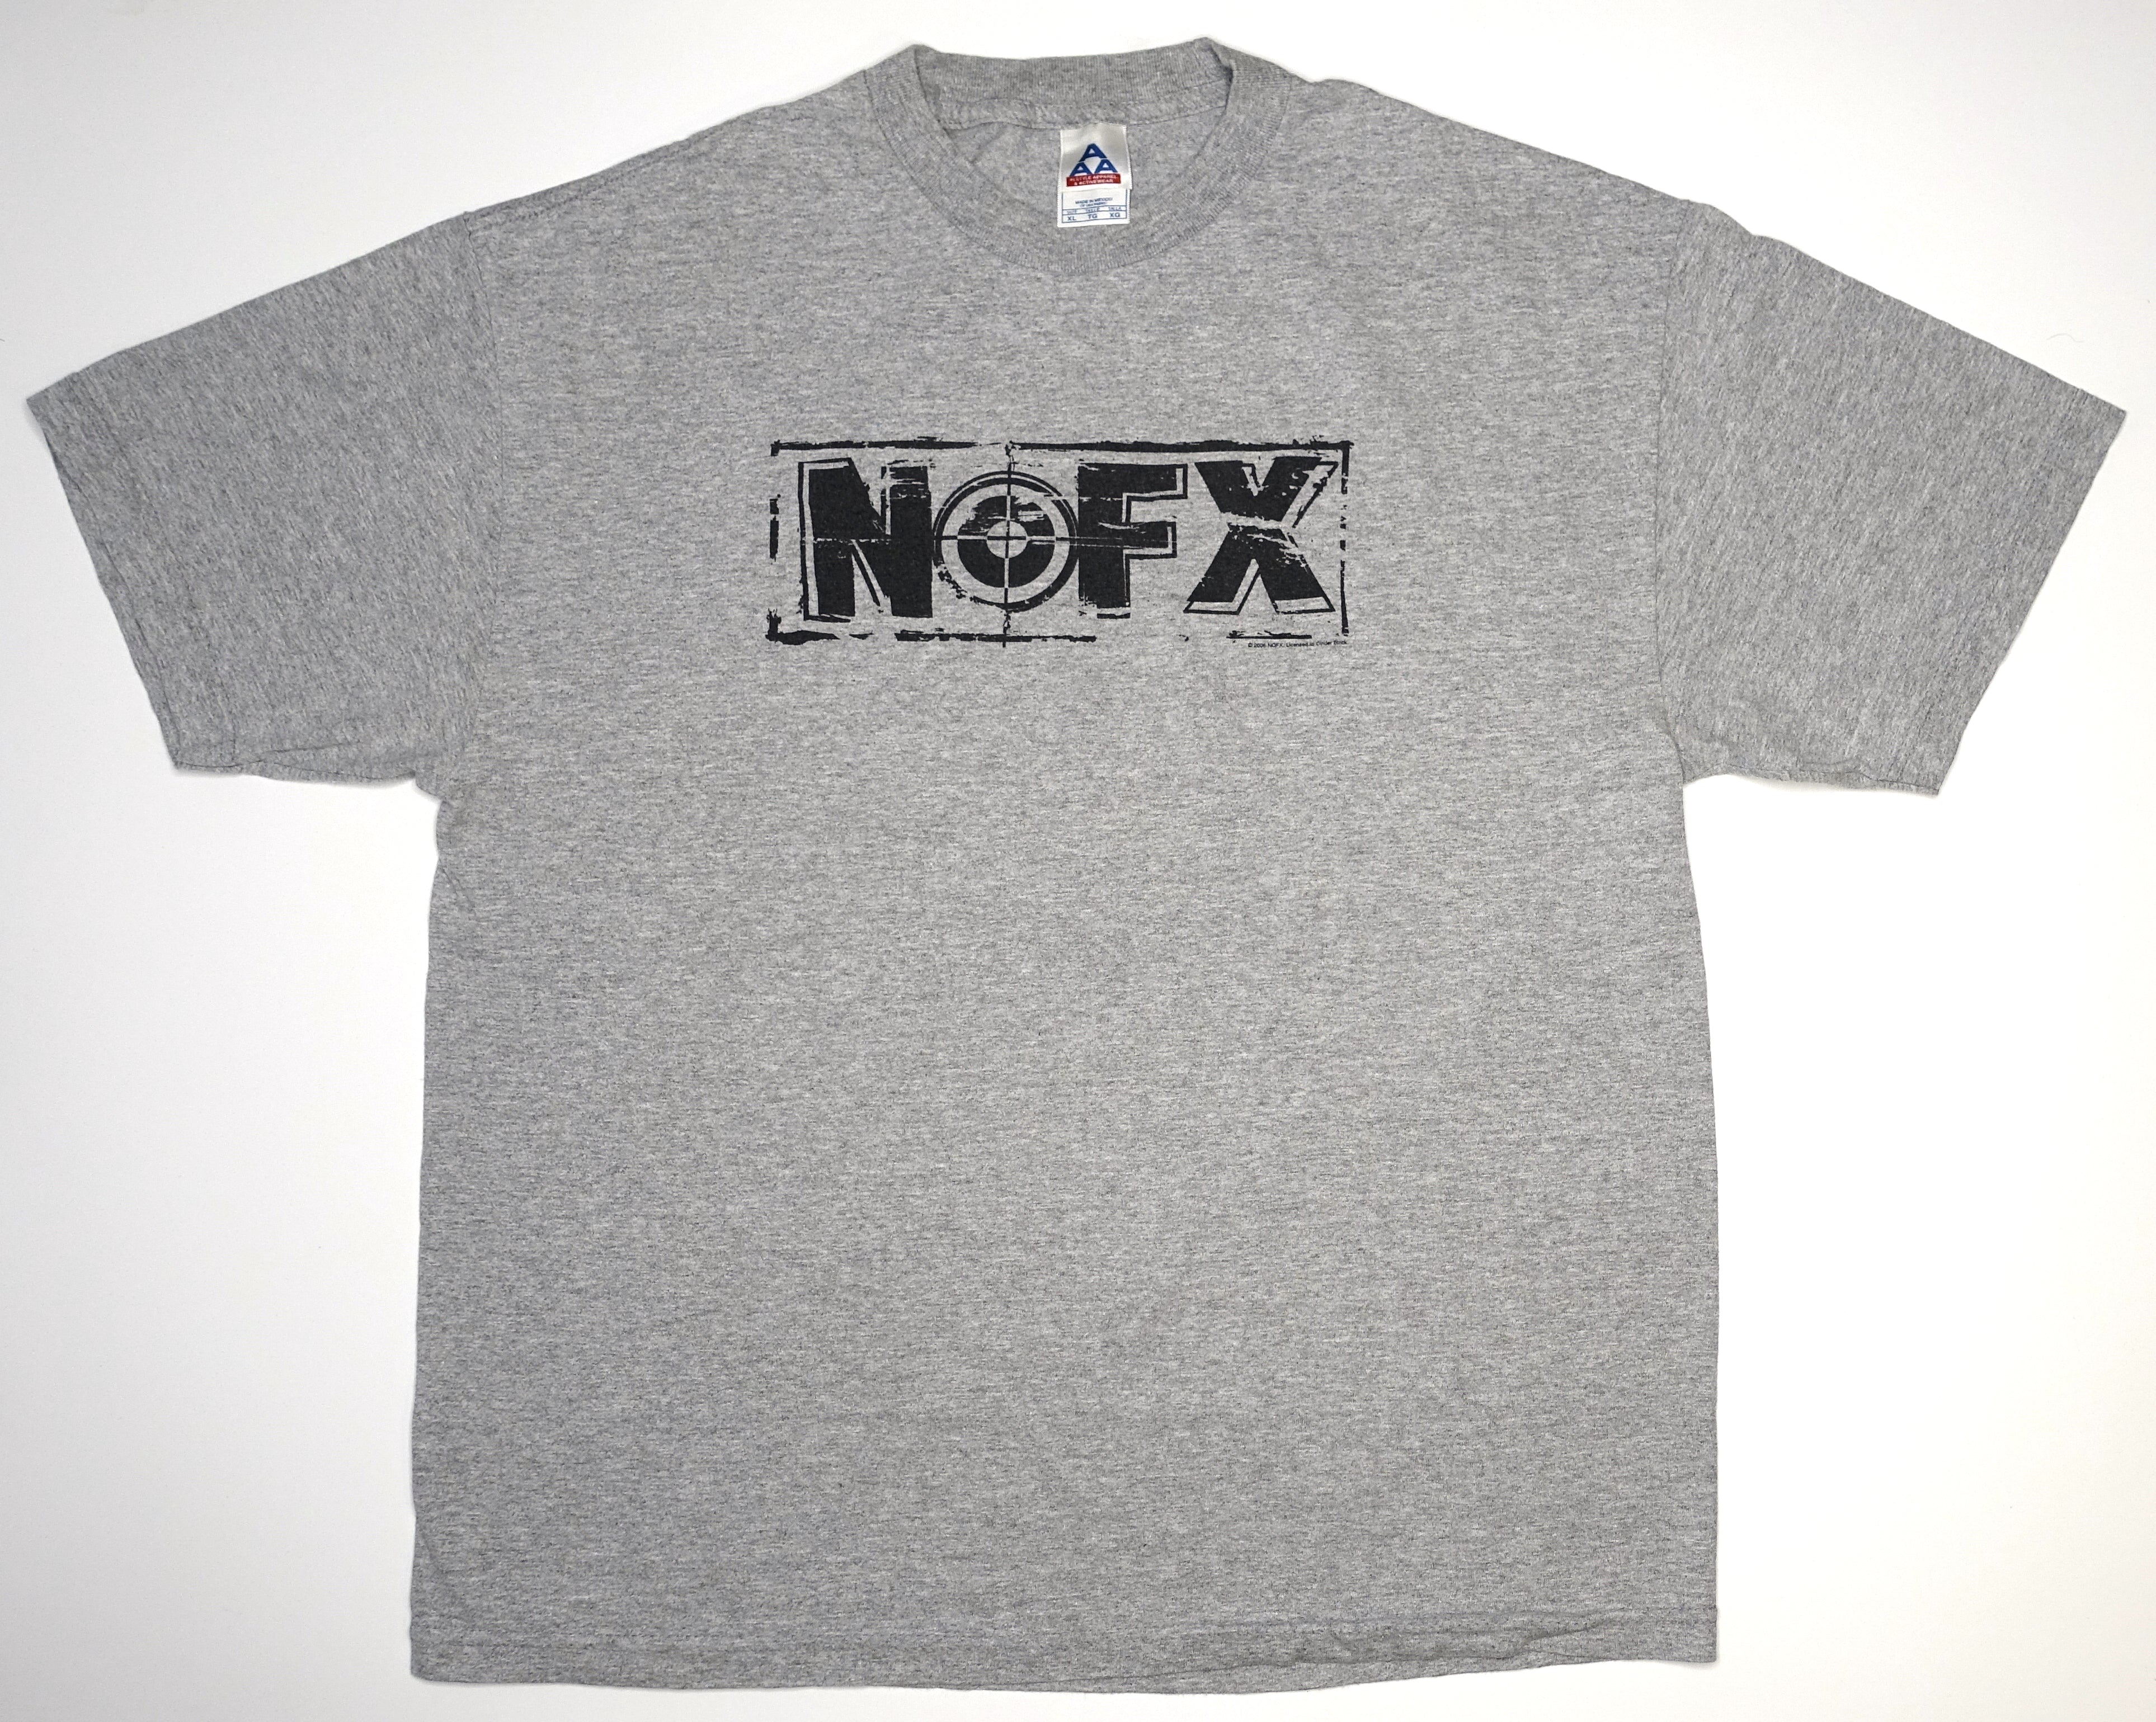 NOFX - Punk Crest / Wolves In Wolves' Clothing 2006 Tour Shirt Size XL